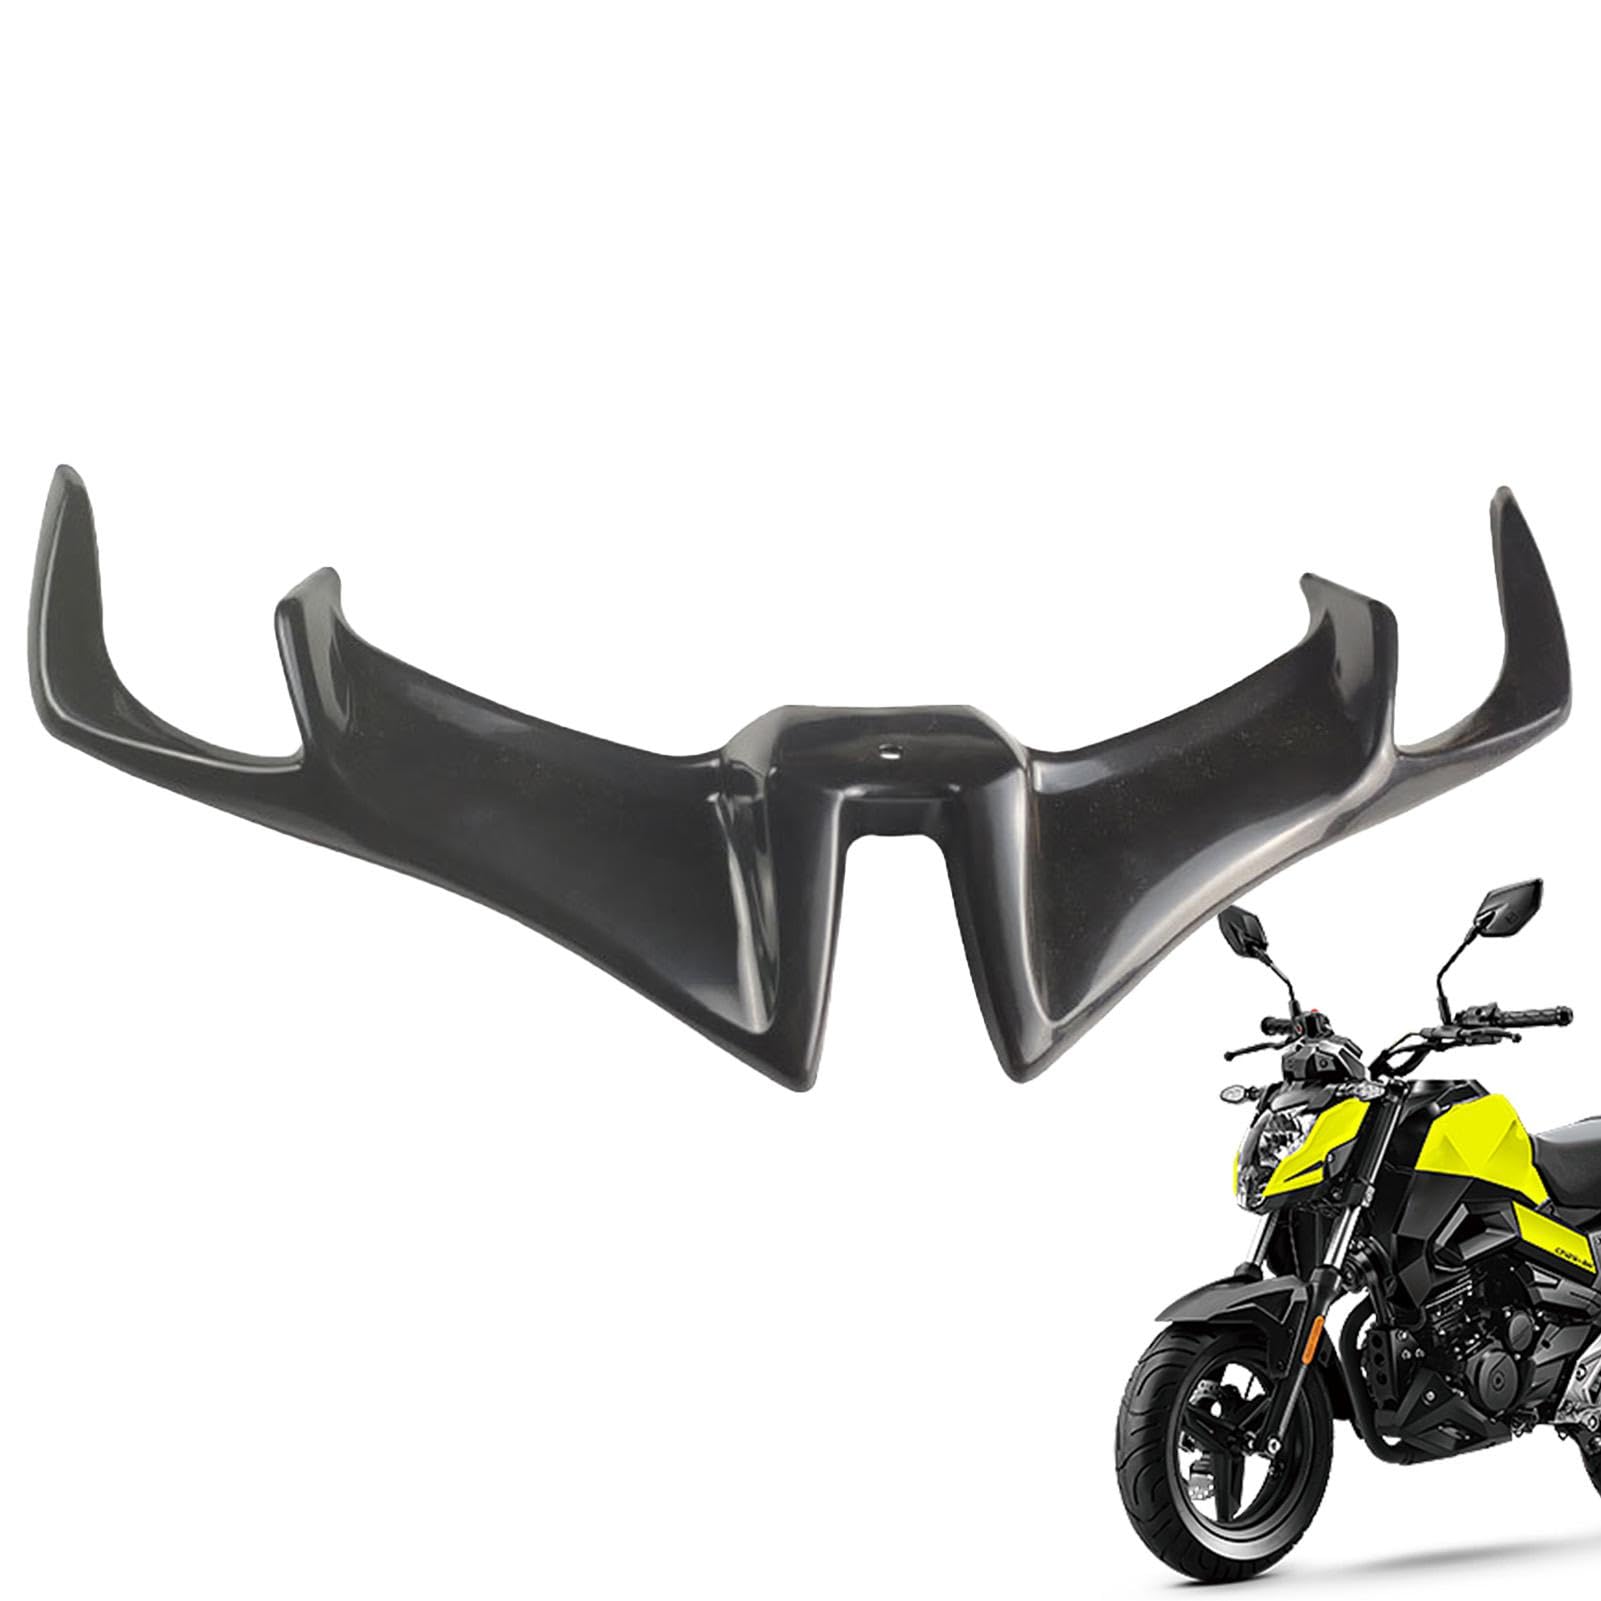 Missmisq Motorrad-Spoiler, aerodynamische Winglets für Motorräder - Aerodynamisches Winglet der Frontverkleidung | Fester Windflügel, Seitenspoiler, dynamischer Flügelspoiler, Motorradzubehör von Missmisq